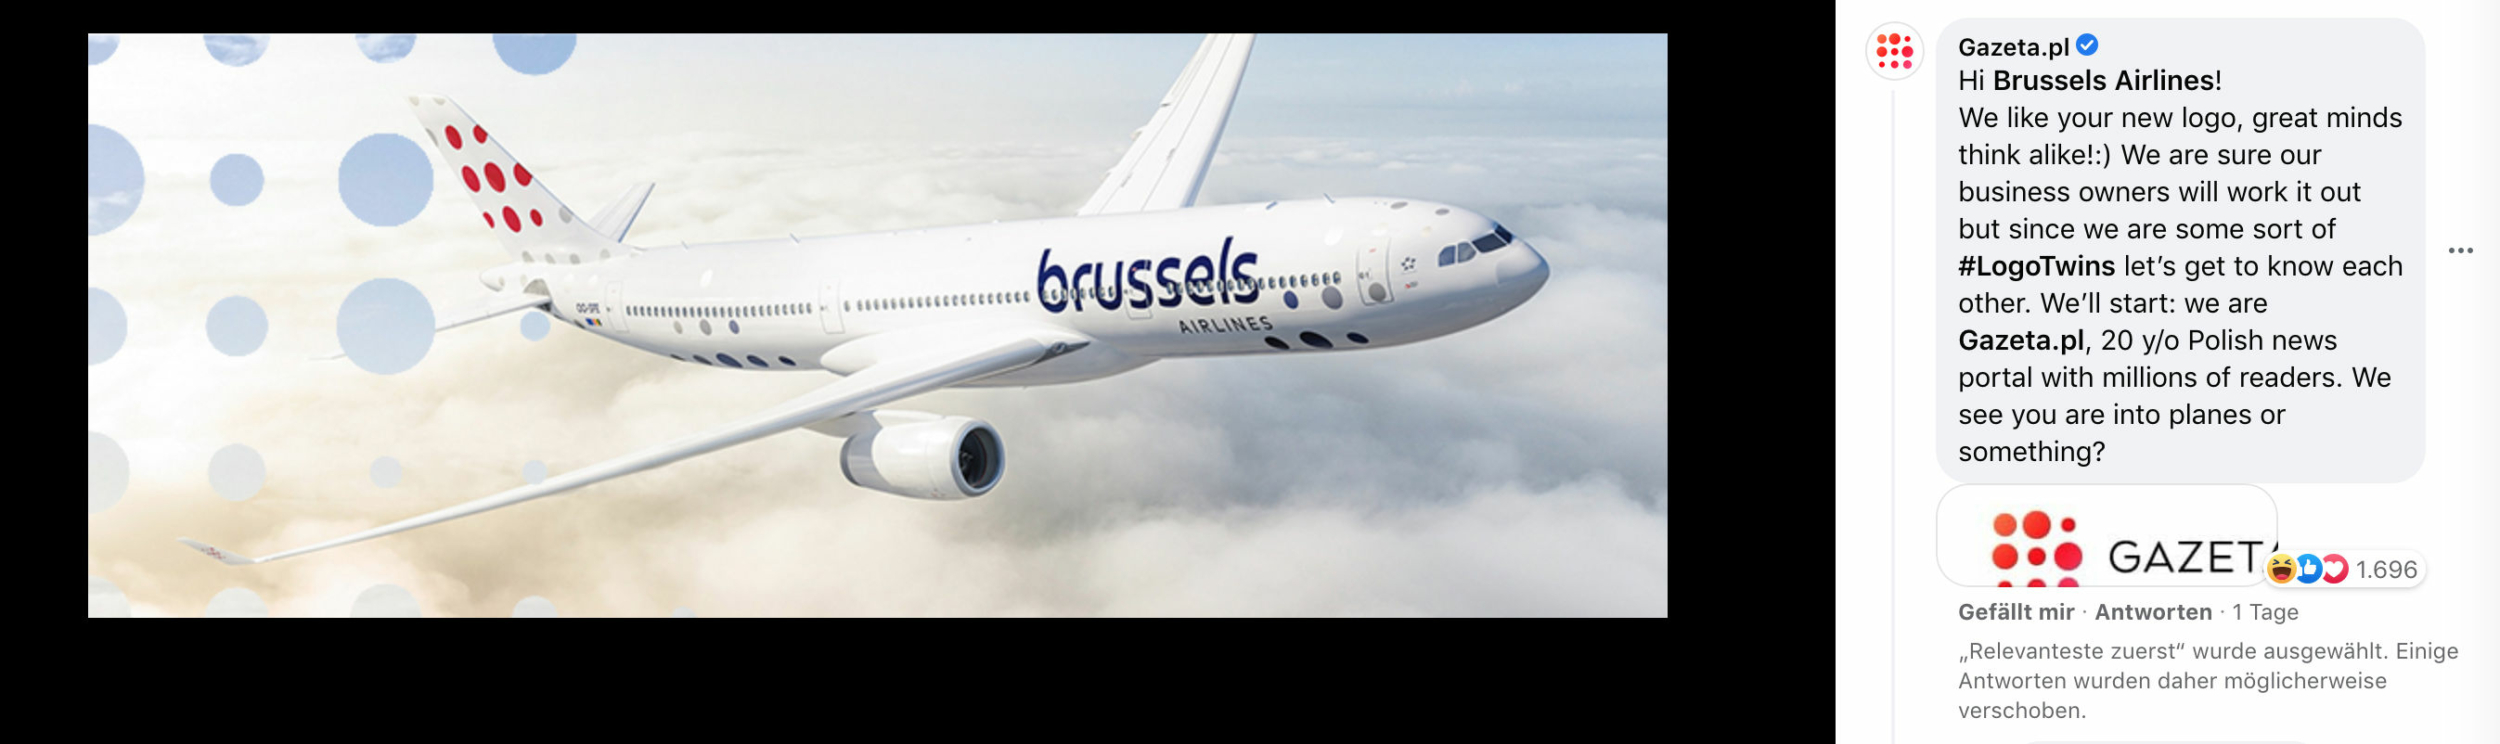 Brussels Airlines – Gazeta.pl